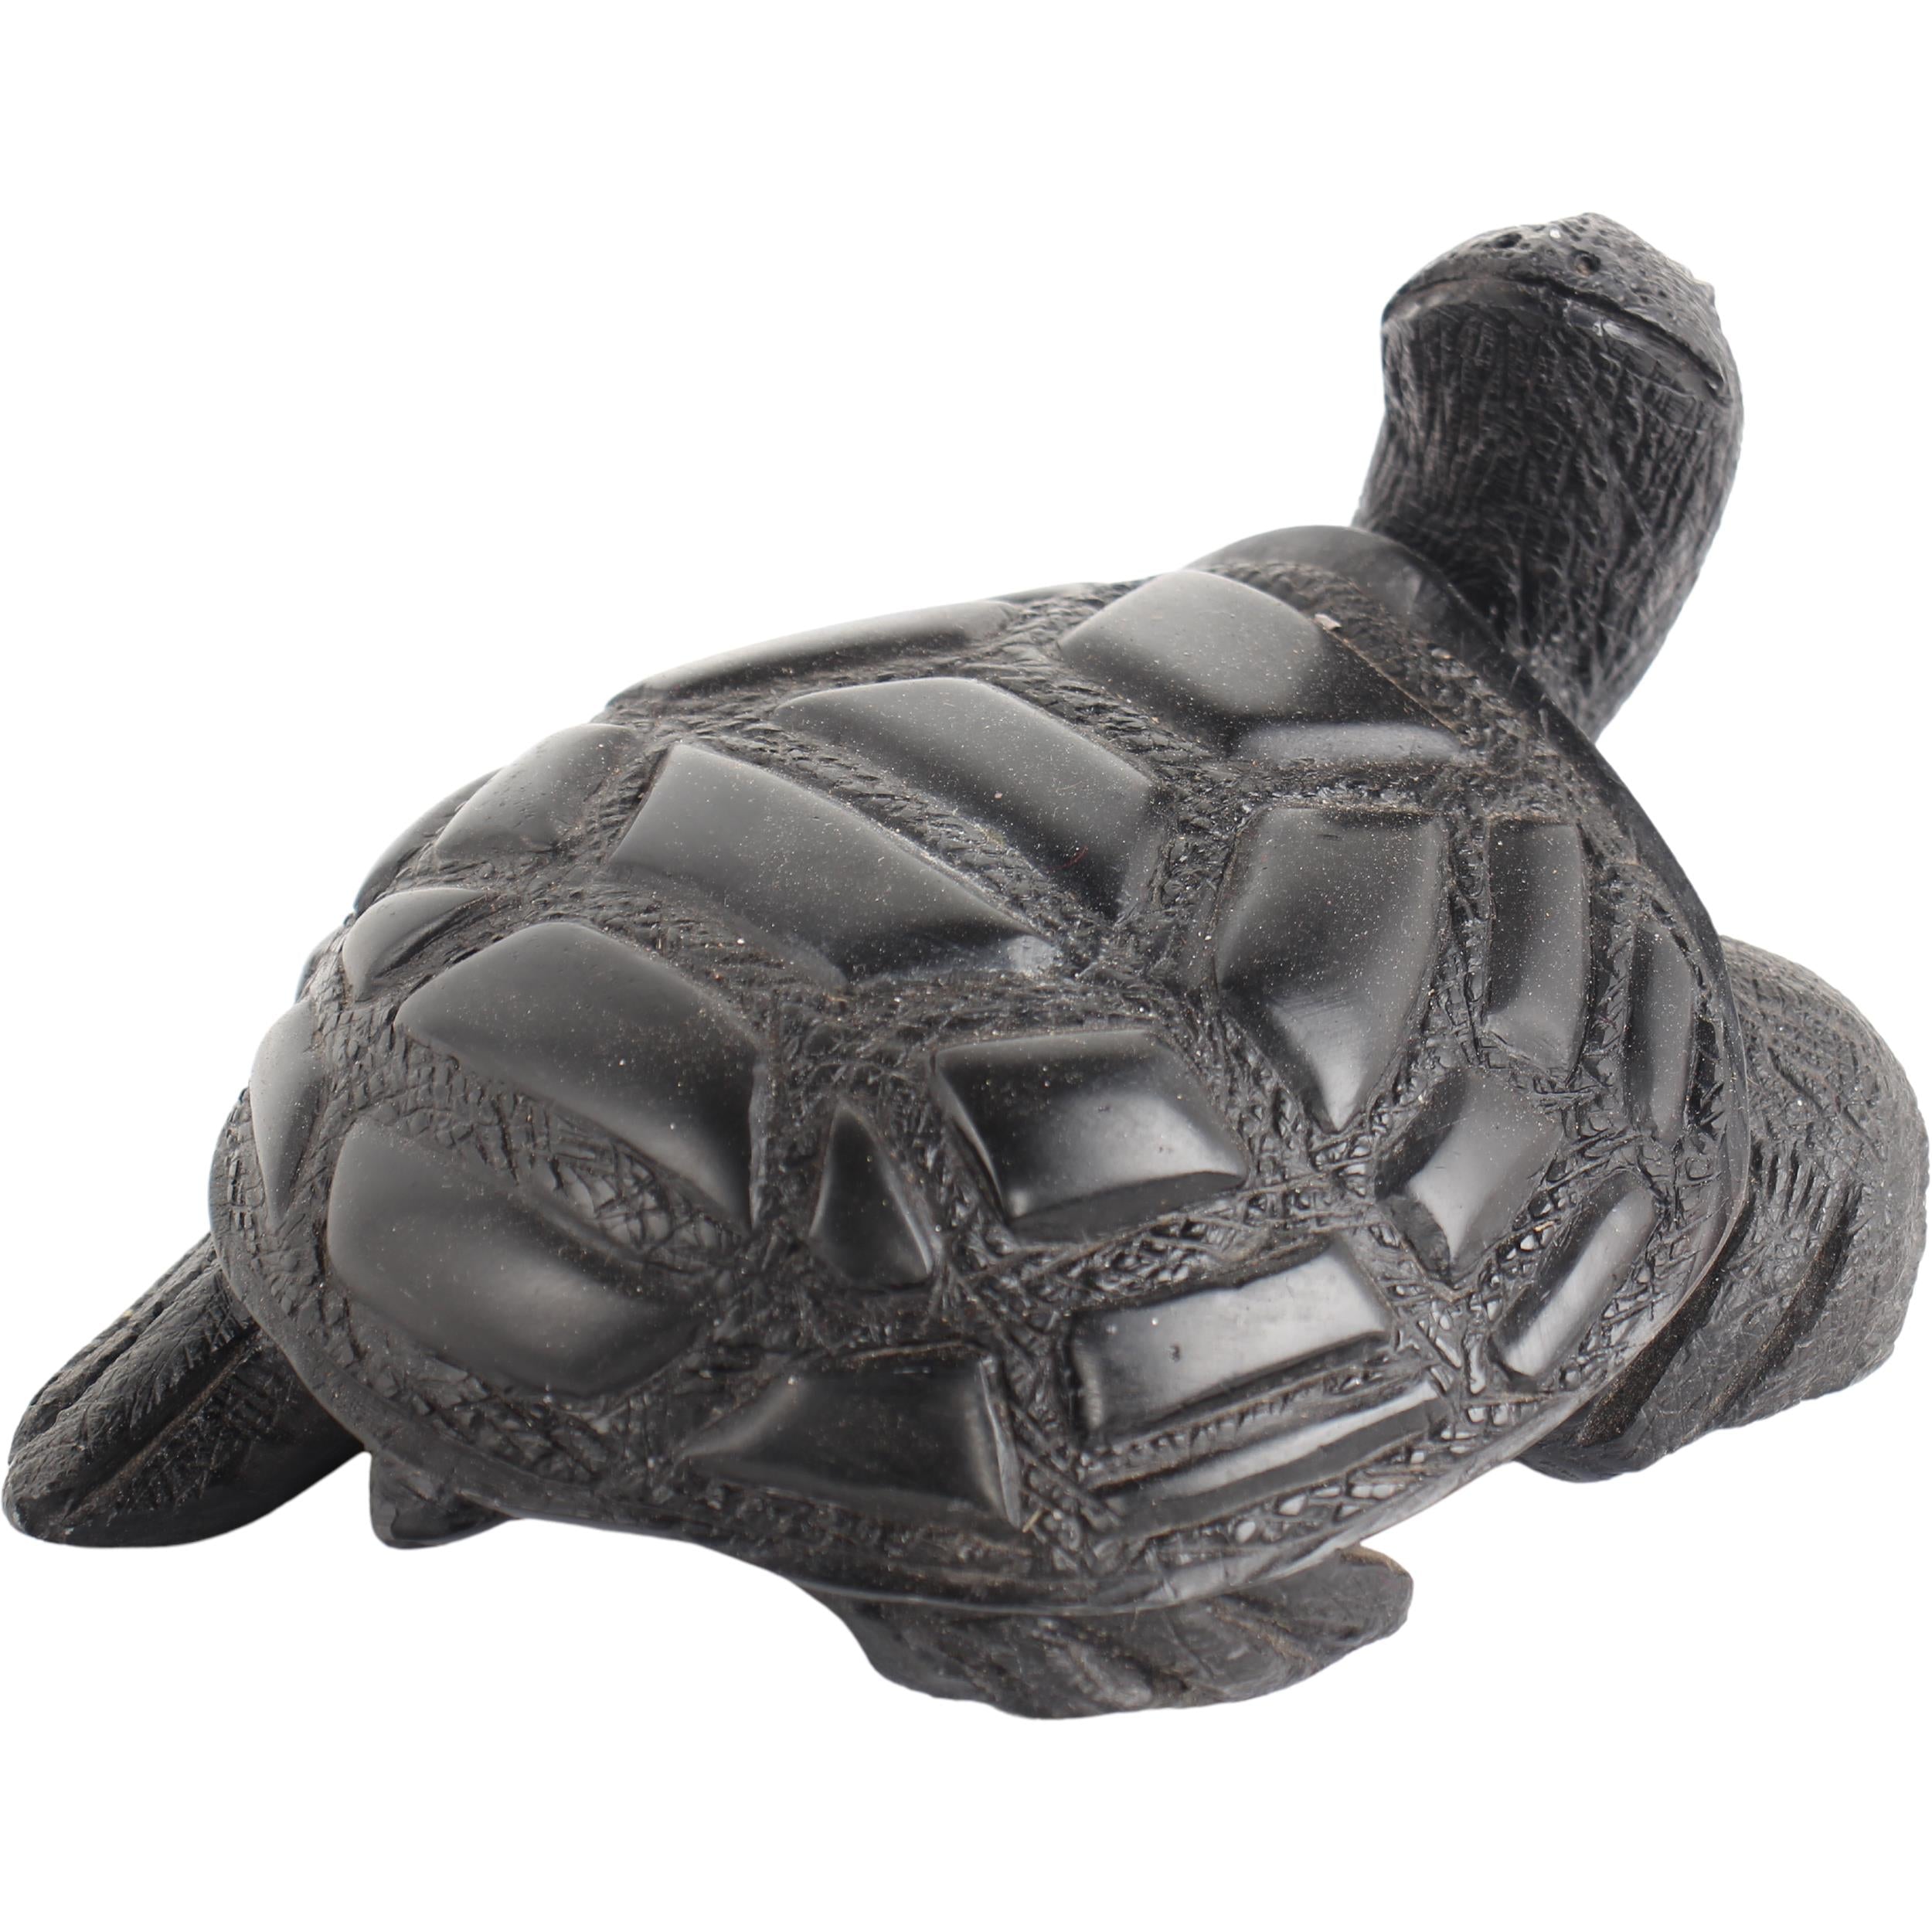 Shona Tribe Serpentine Stone Tortoise ~5.5" Tall